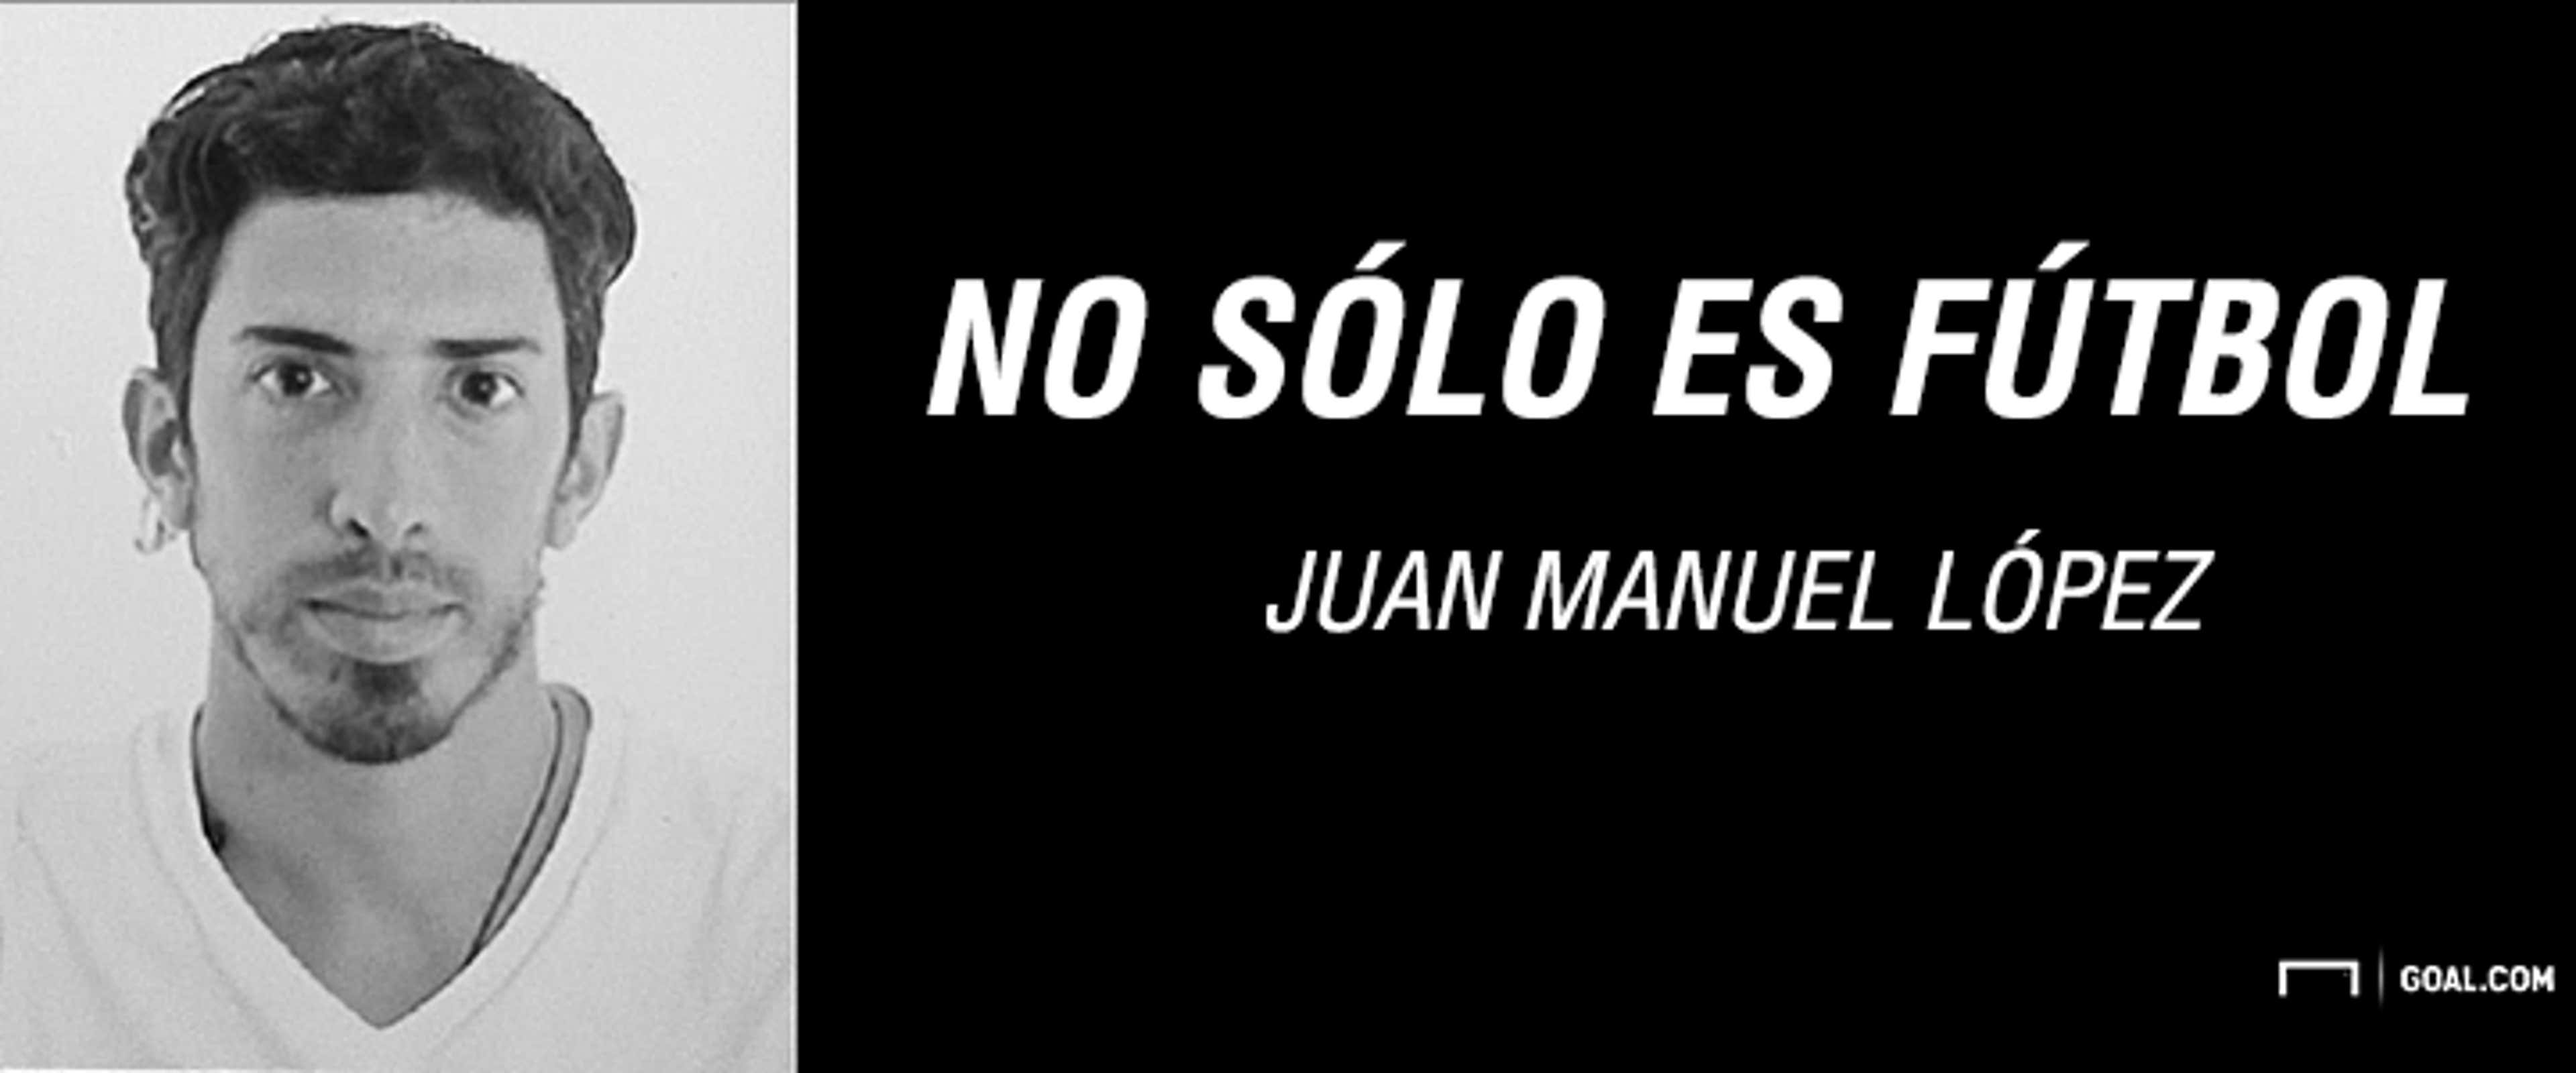 Juan Manuel Lopez banner